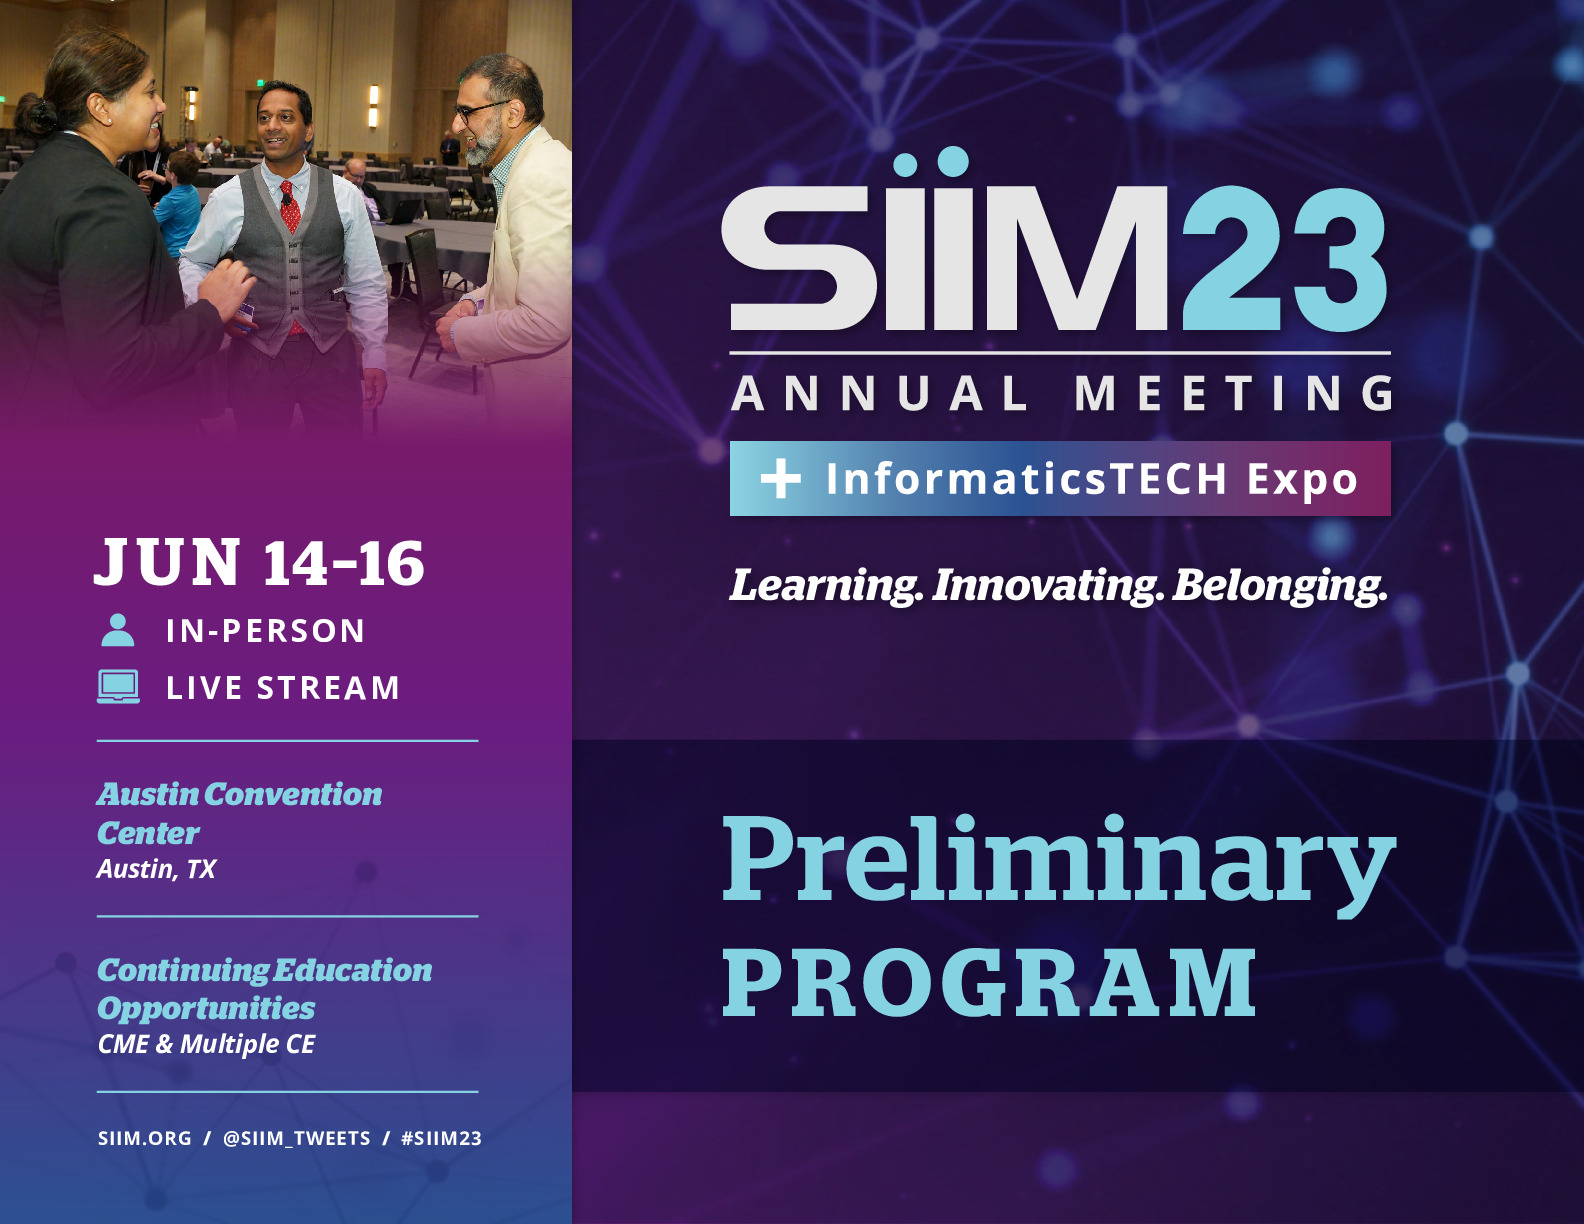 siim23_preliminaryprogram